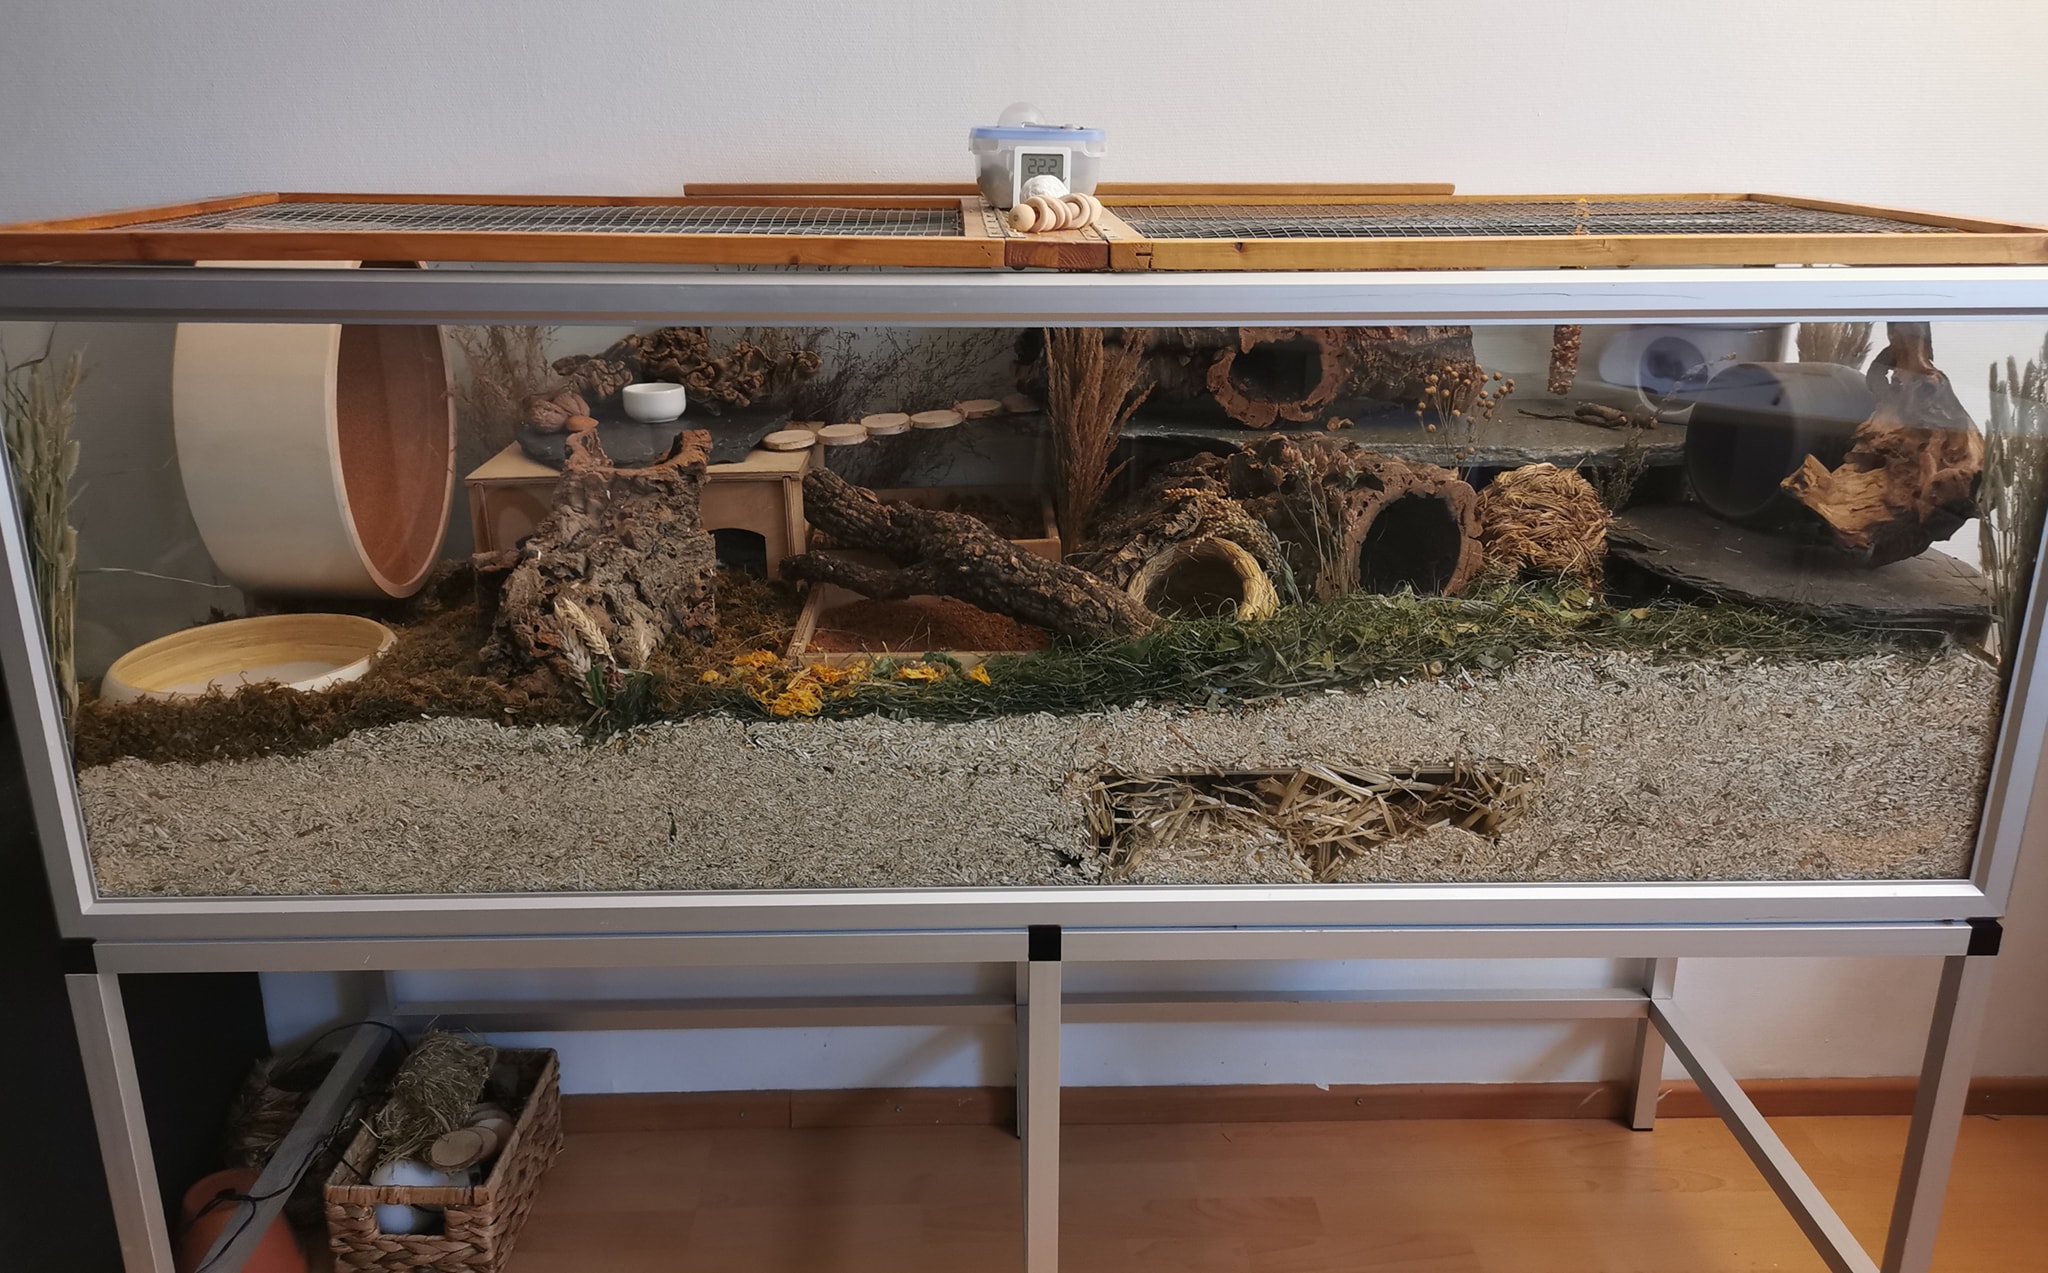 150cm x 55cm Aquarium for a Syrian hamster